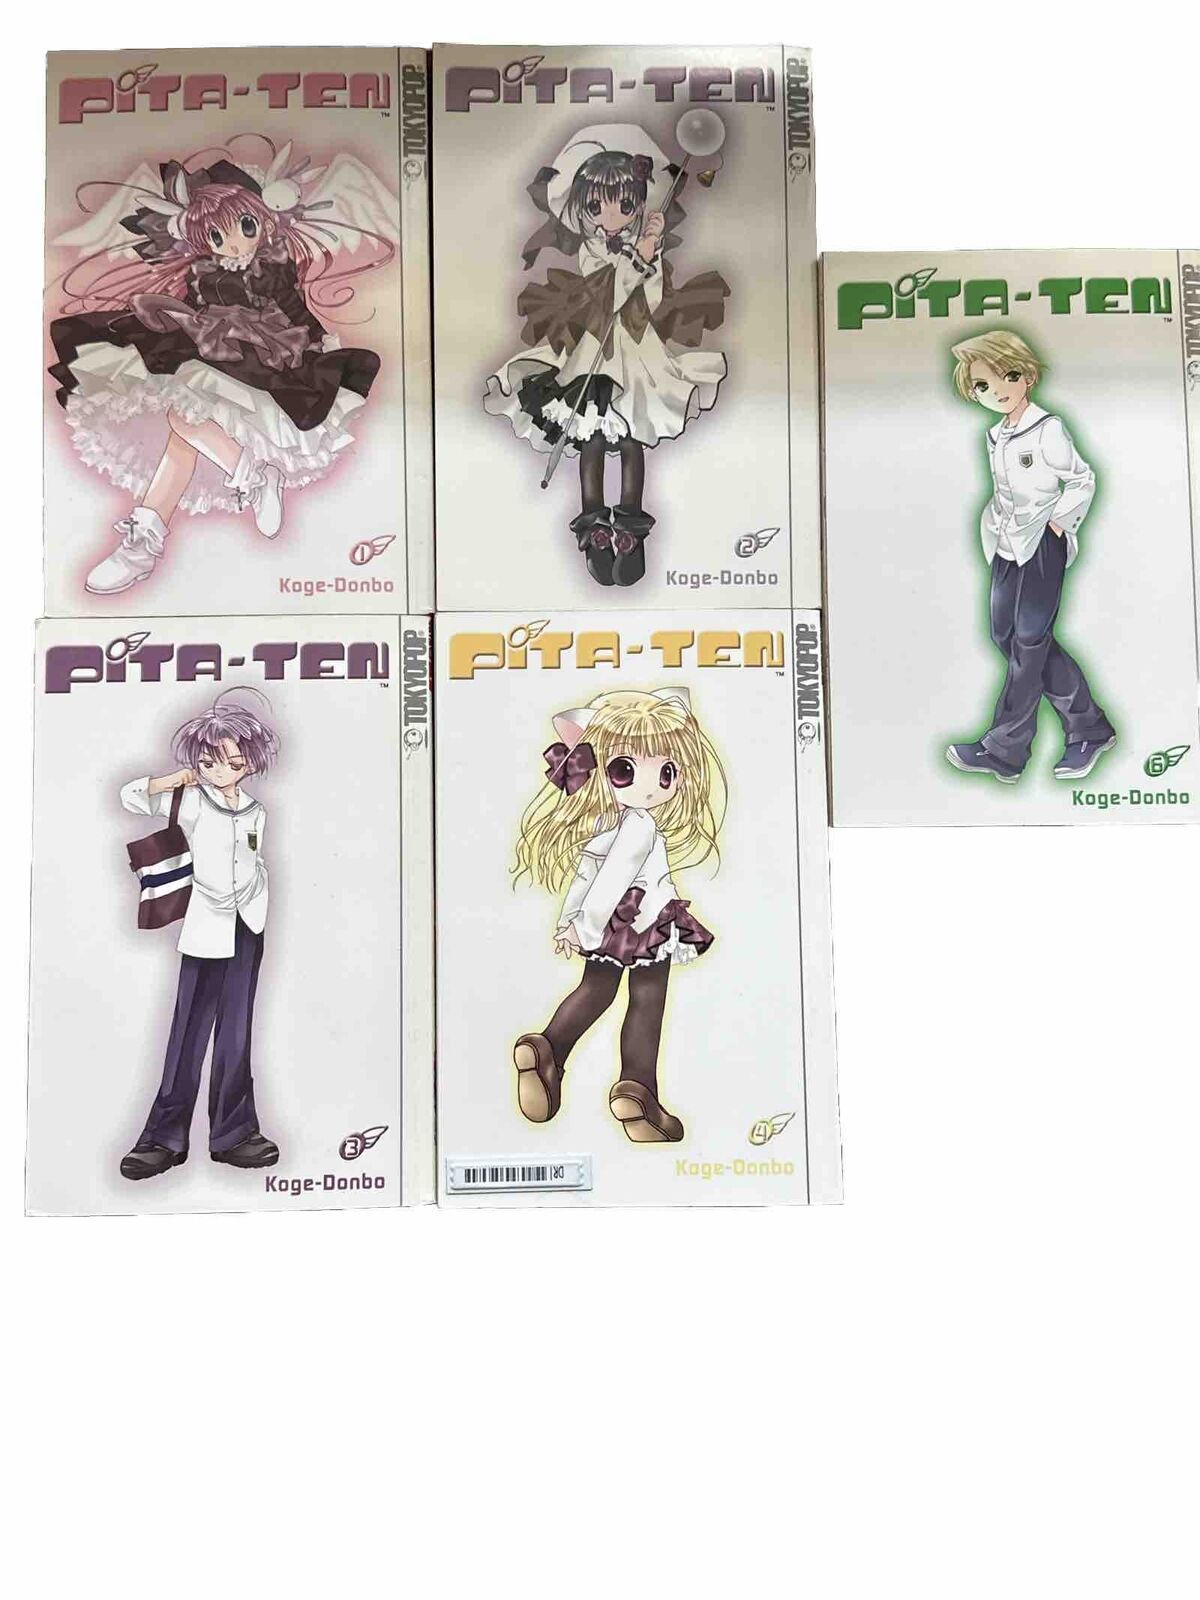 Pita-Ten Vol 1 2 3 4 6 Books Set Manga Graphic Novel Comic Lot Of 5